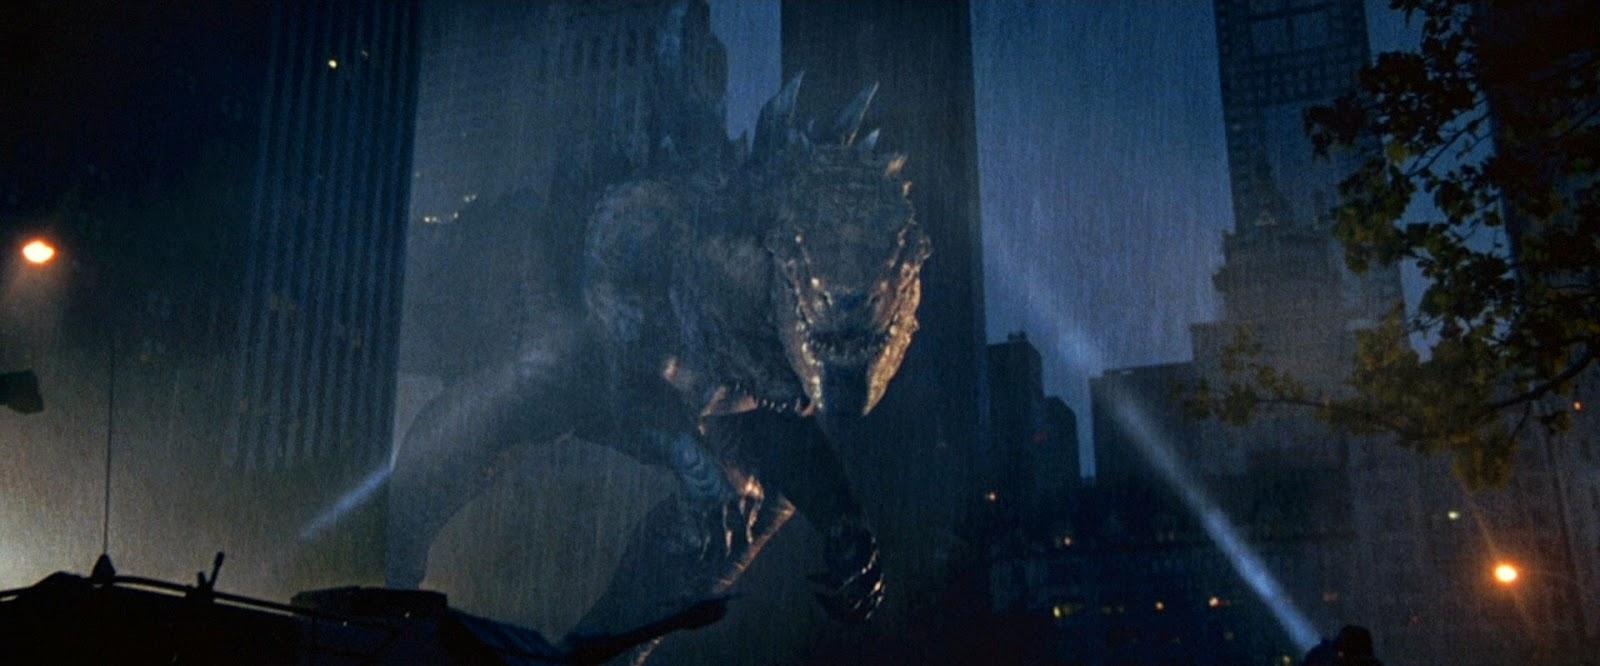 Godzilla (1998) Pics, Movie Collection